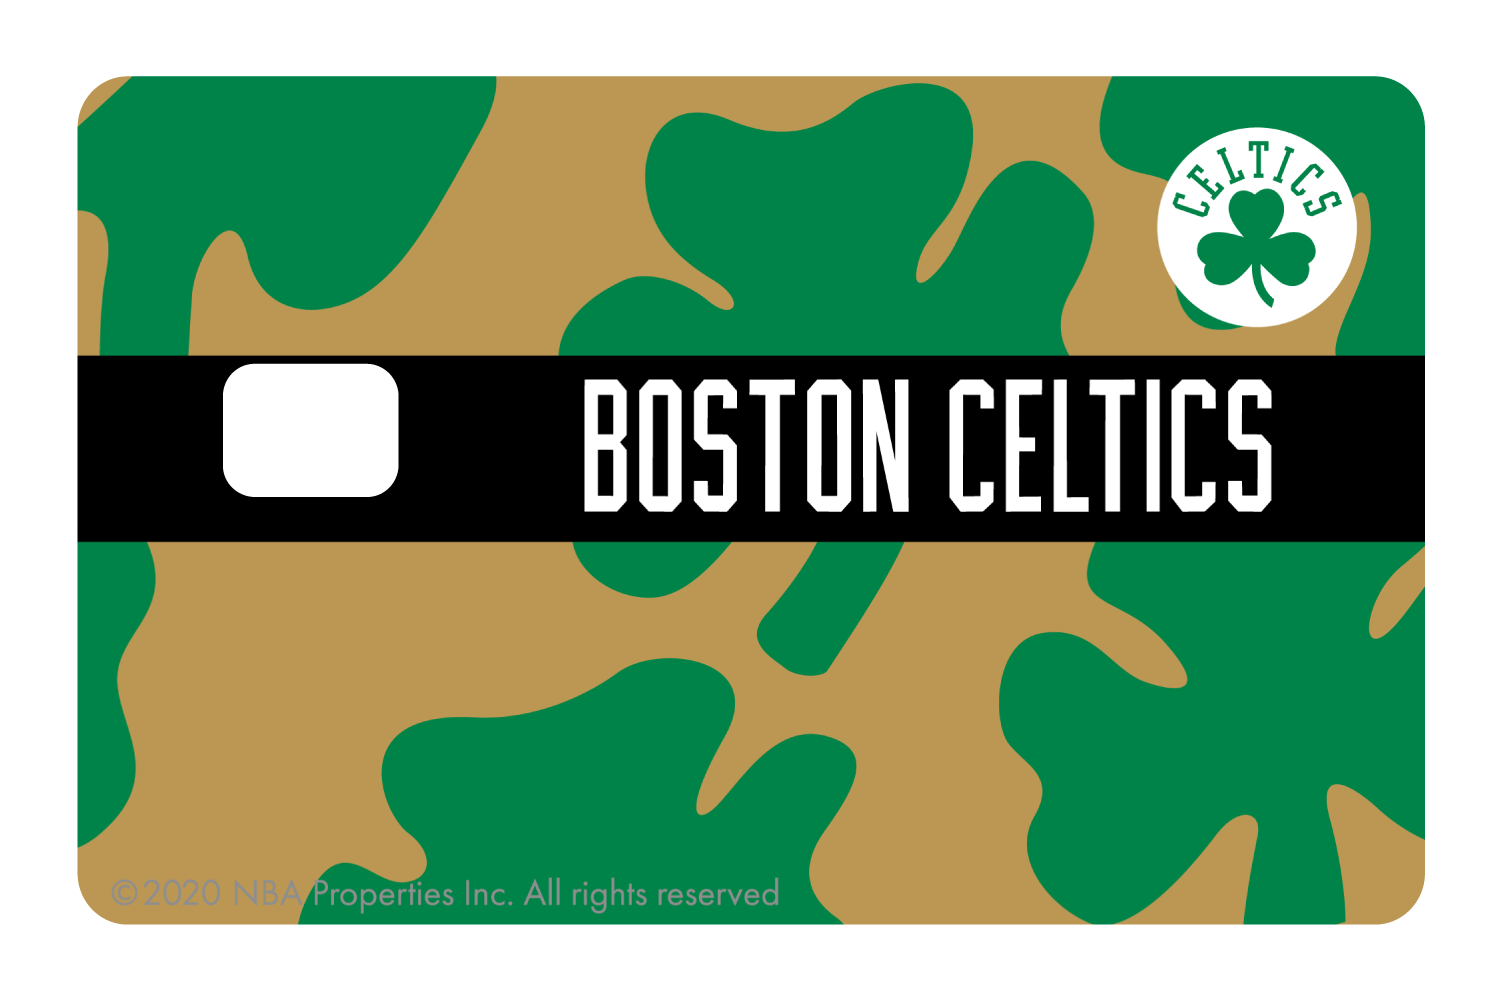 Boston Celtics: Midcourt